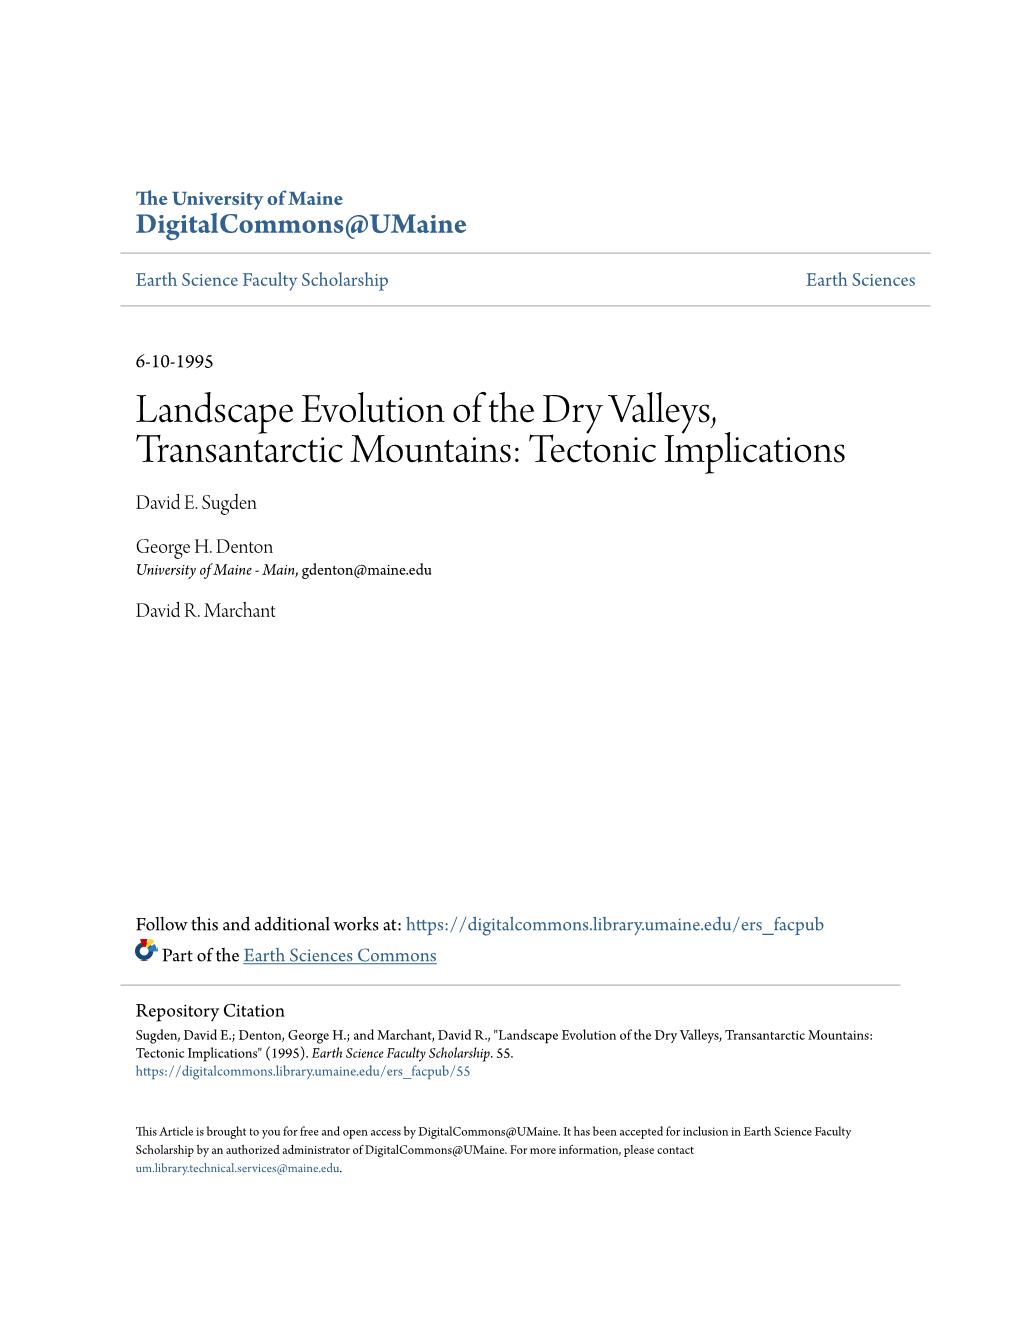 Landscape Evolution of the Dry Valleys, Transantarctic Mountains: Tectonic Implications David E